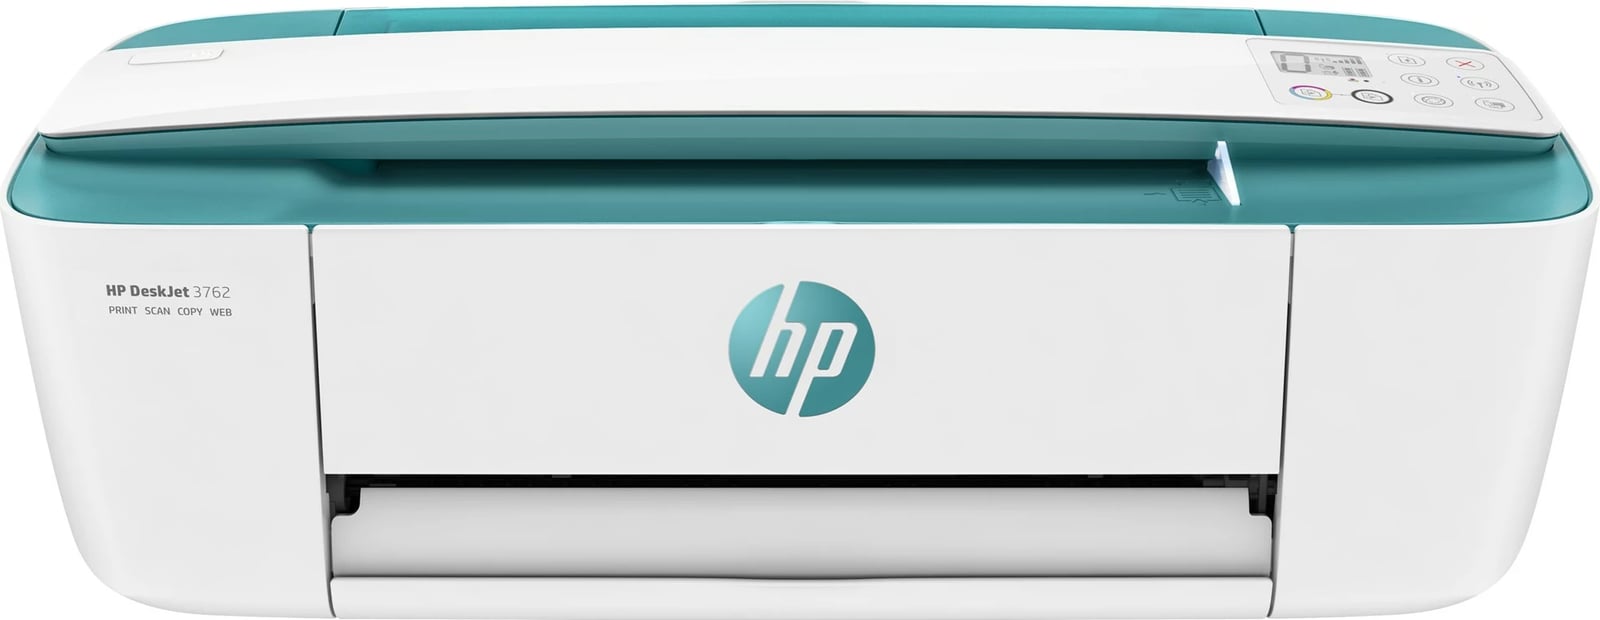 Printer All-in-One Printer HP DeskJet 3762 T8X23B, Wi-Fi, i bardhë